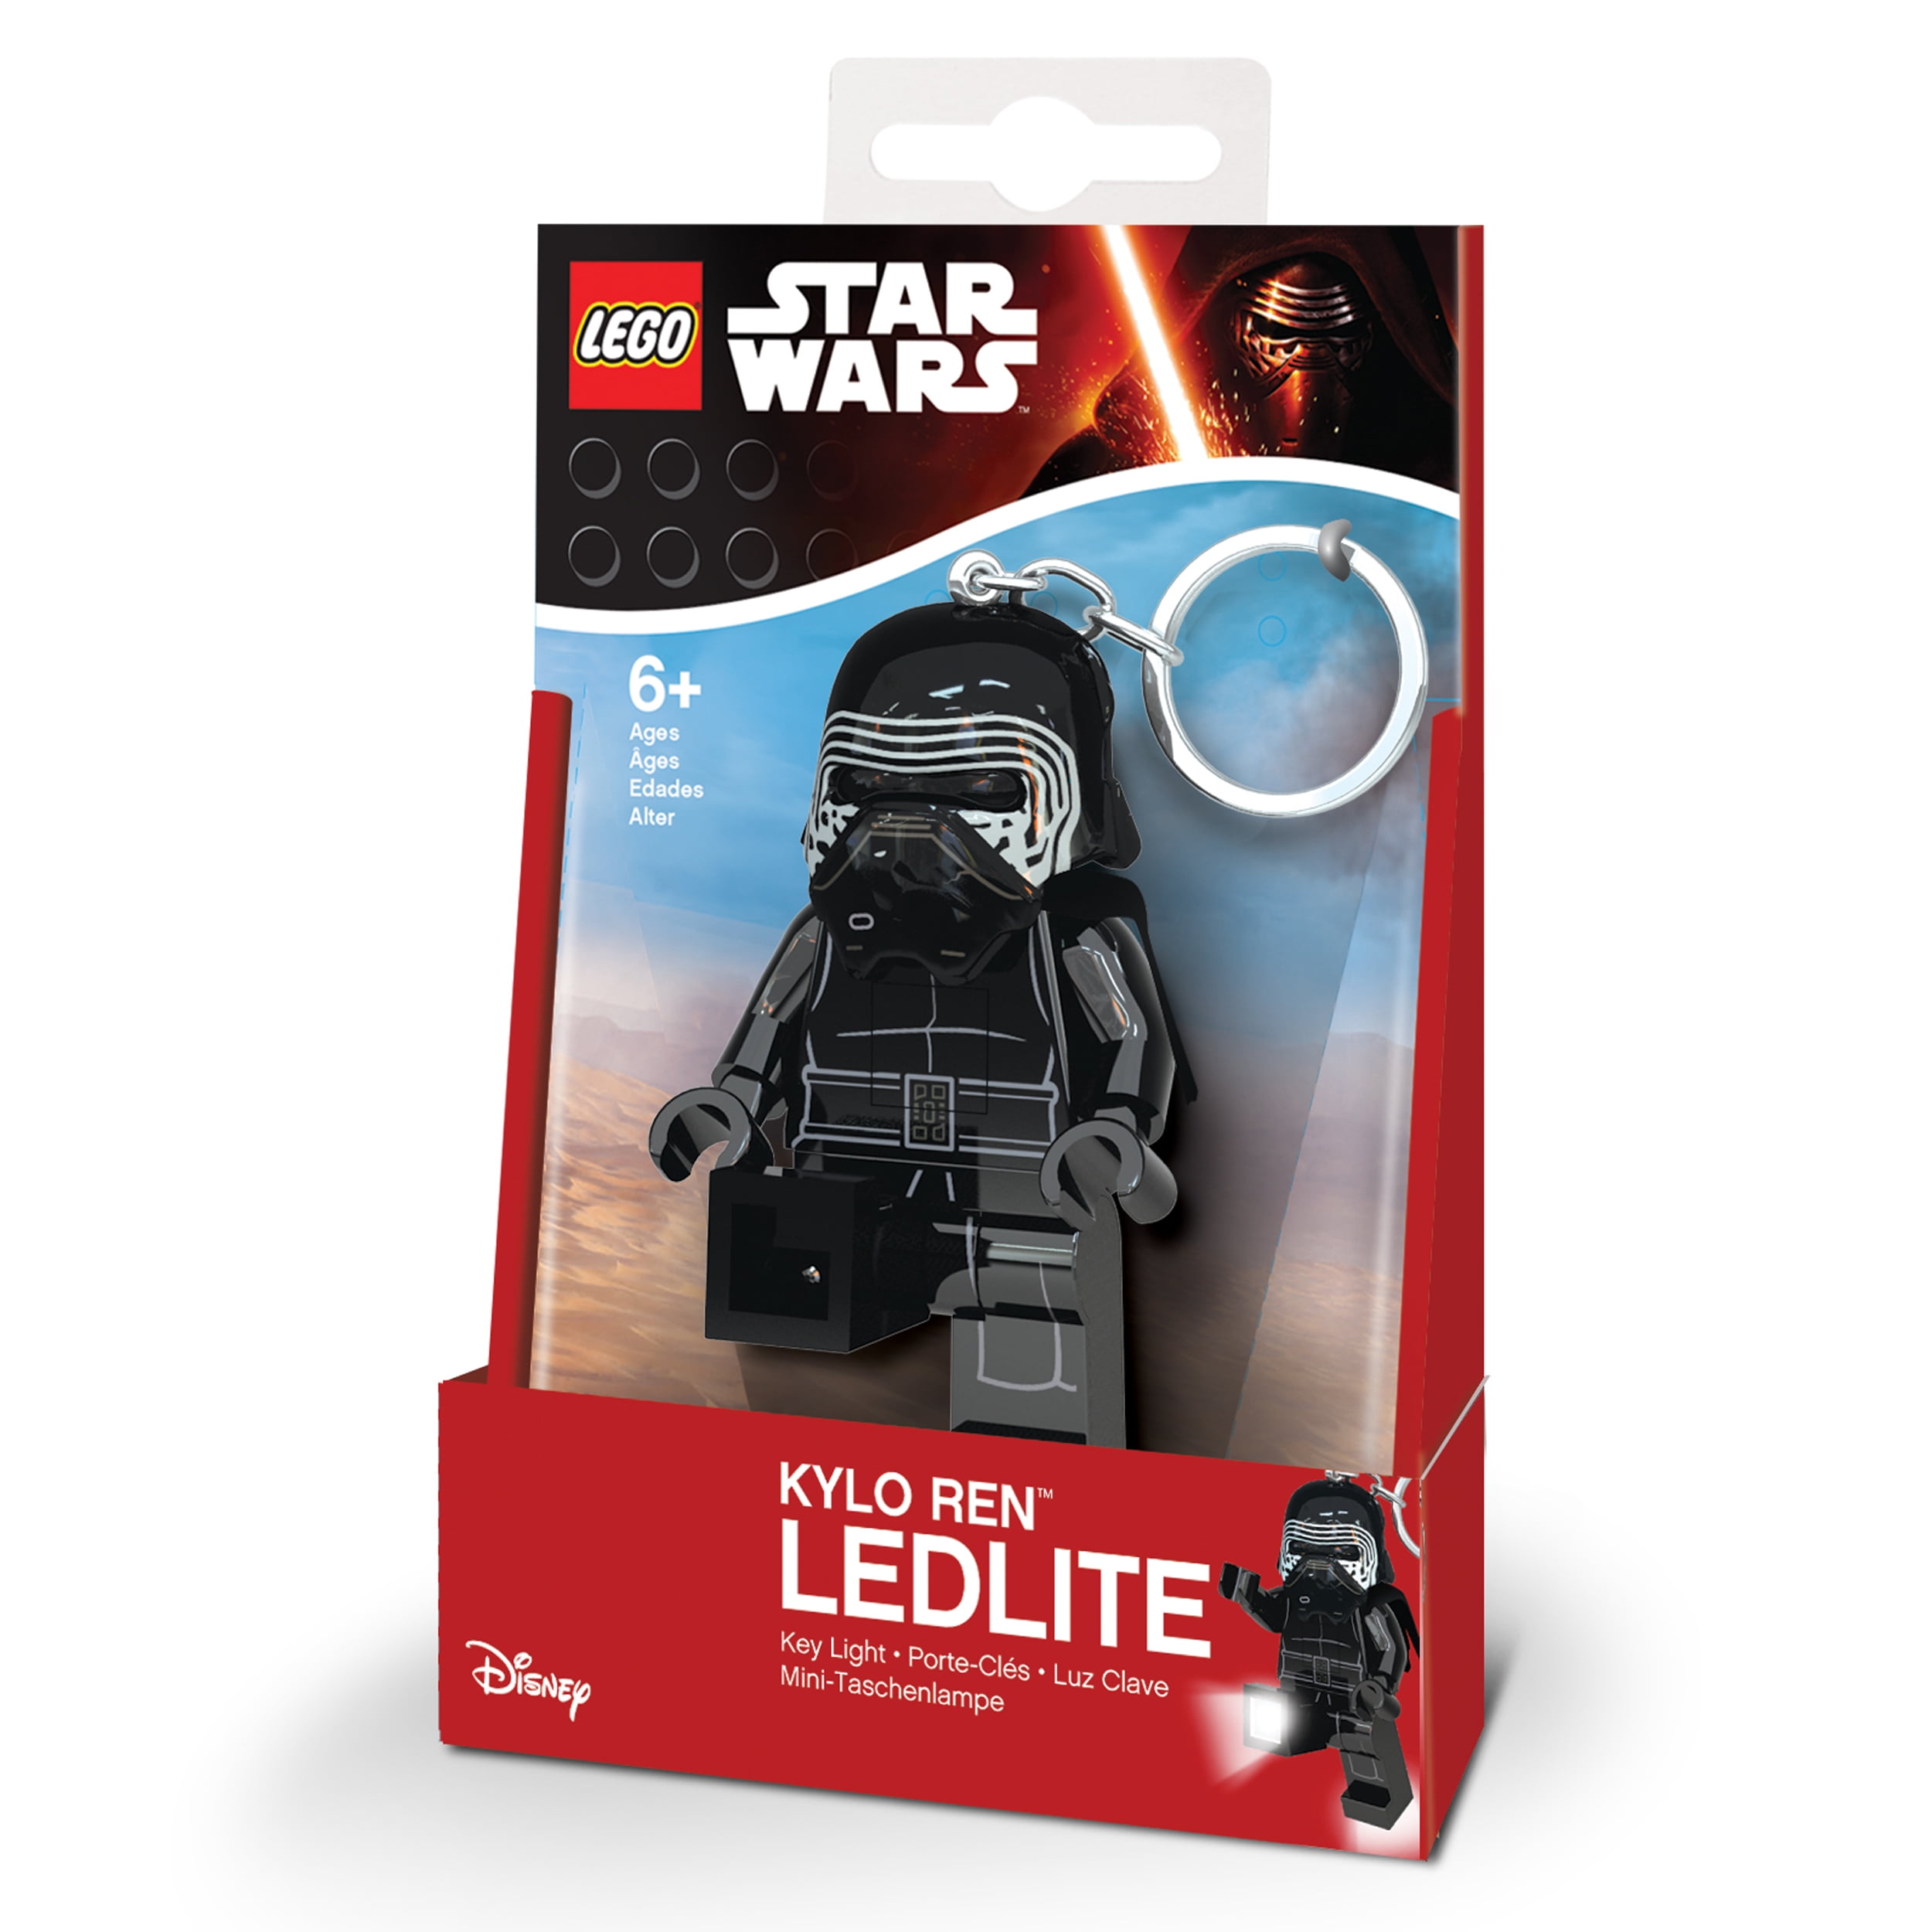 Boxed Star Wars LEGO First Order Pilot LED Key Light Keyring Keychain 